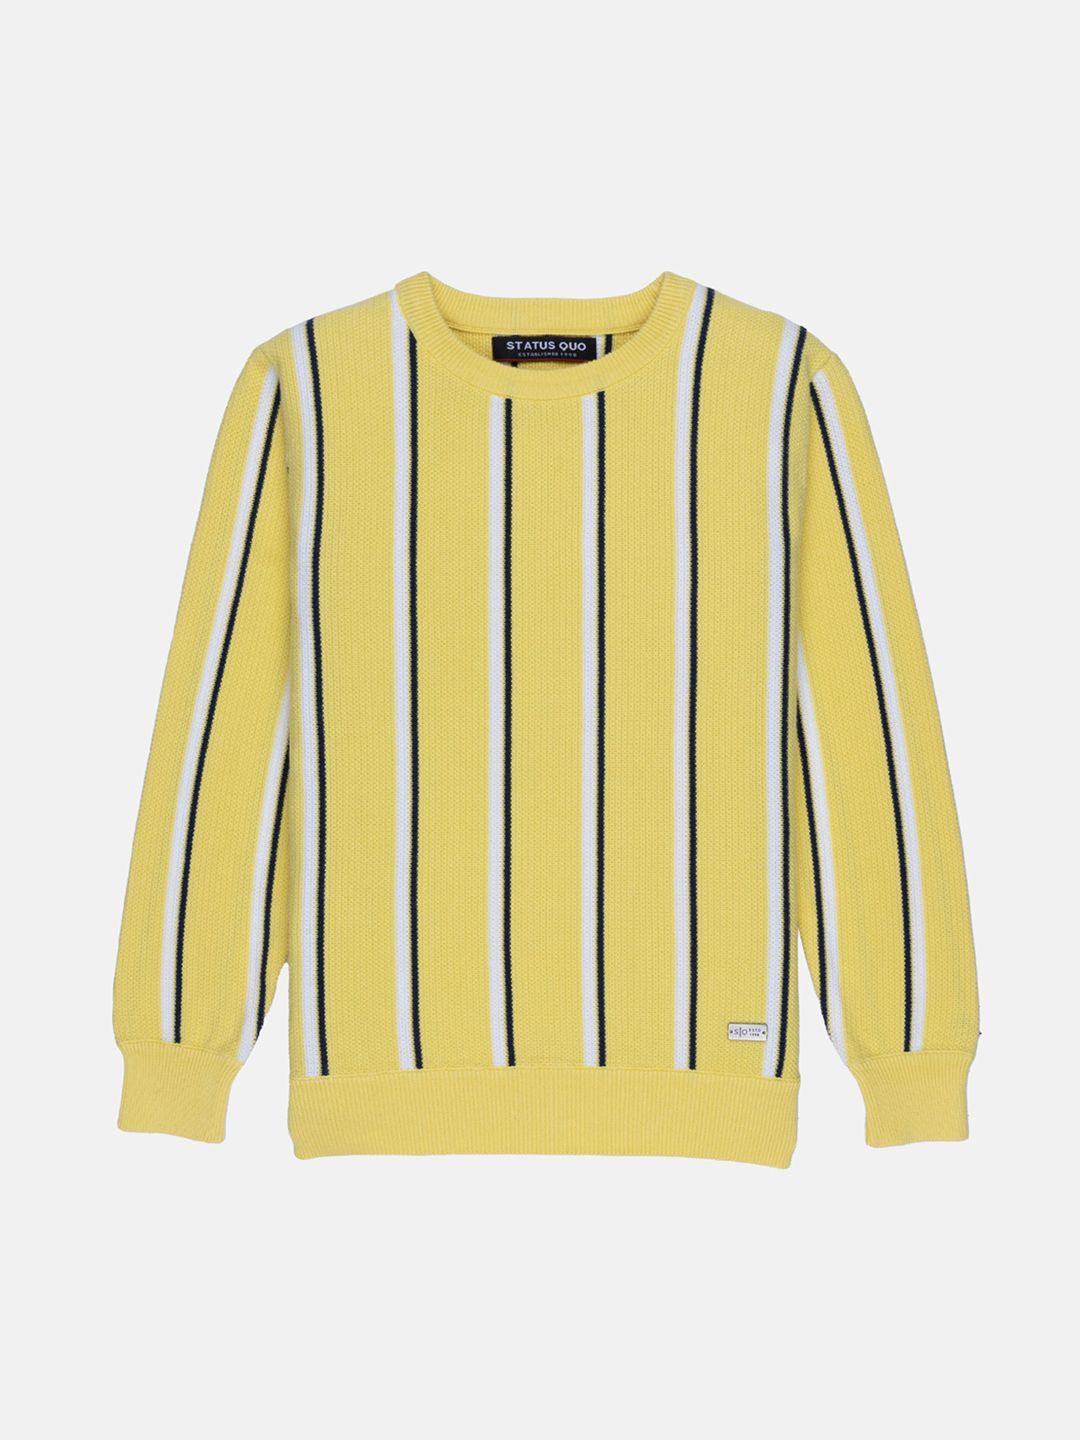 status quo boys yellow & white striped pullover